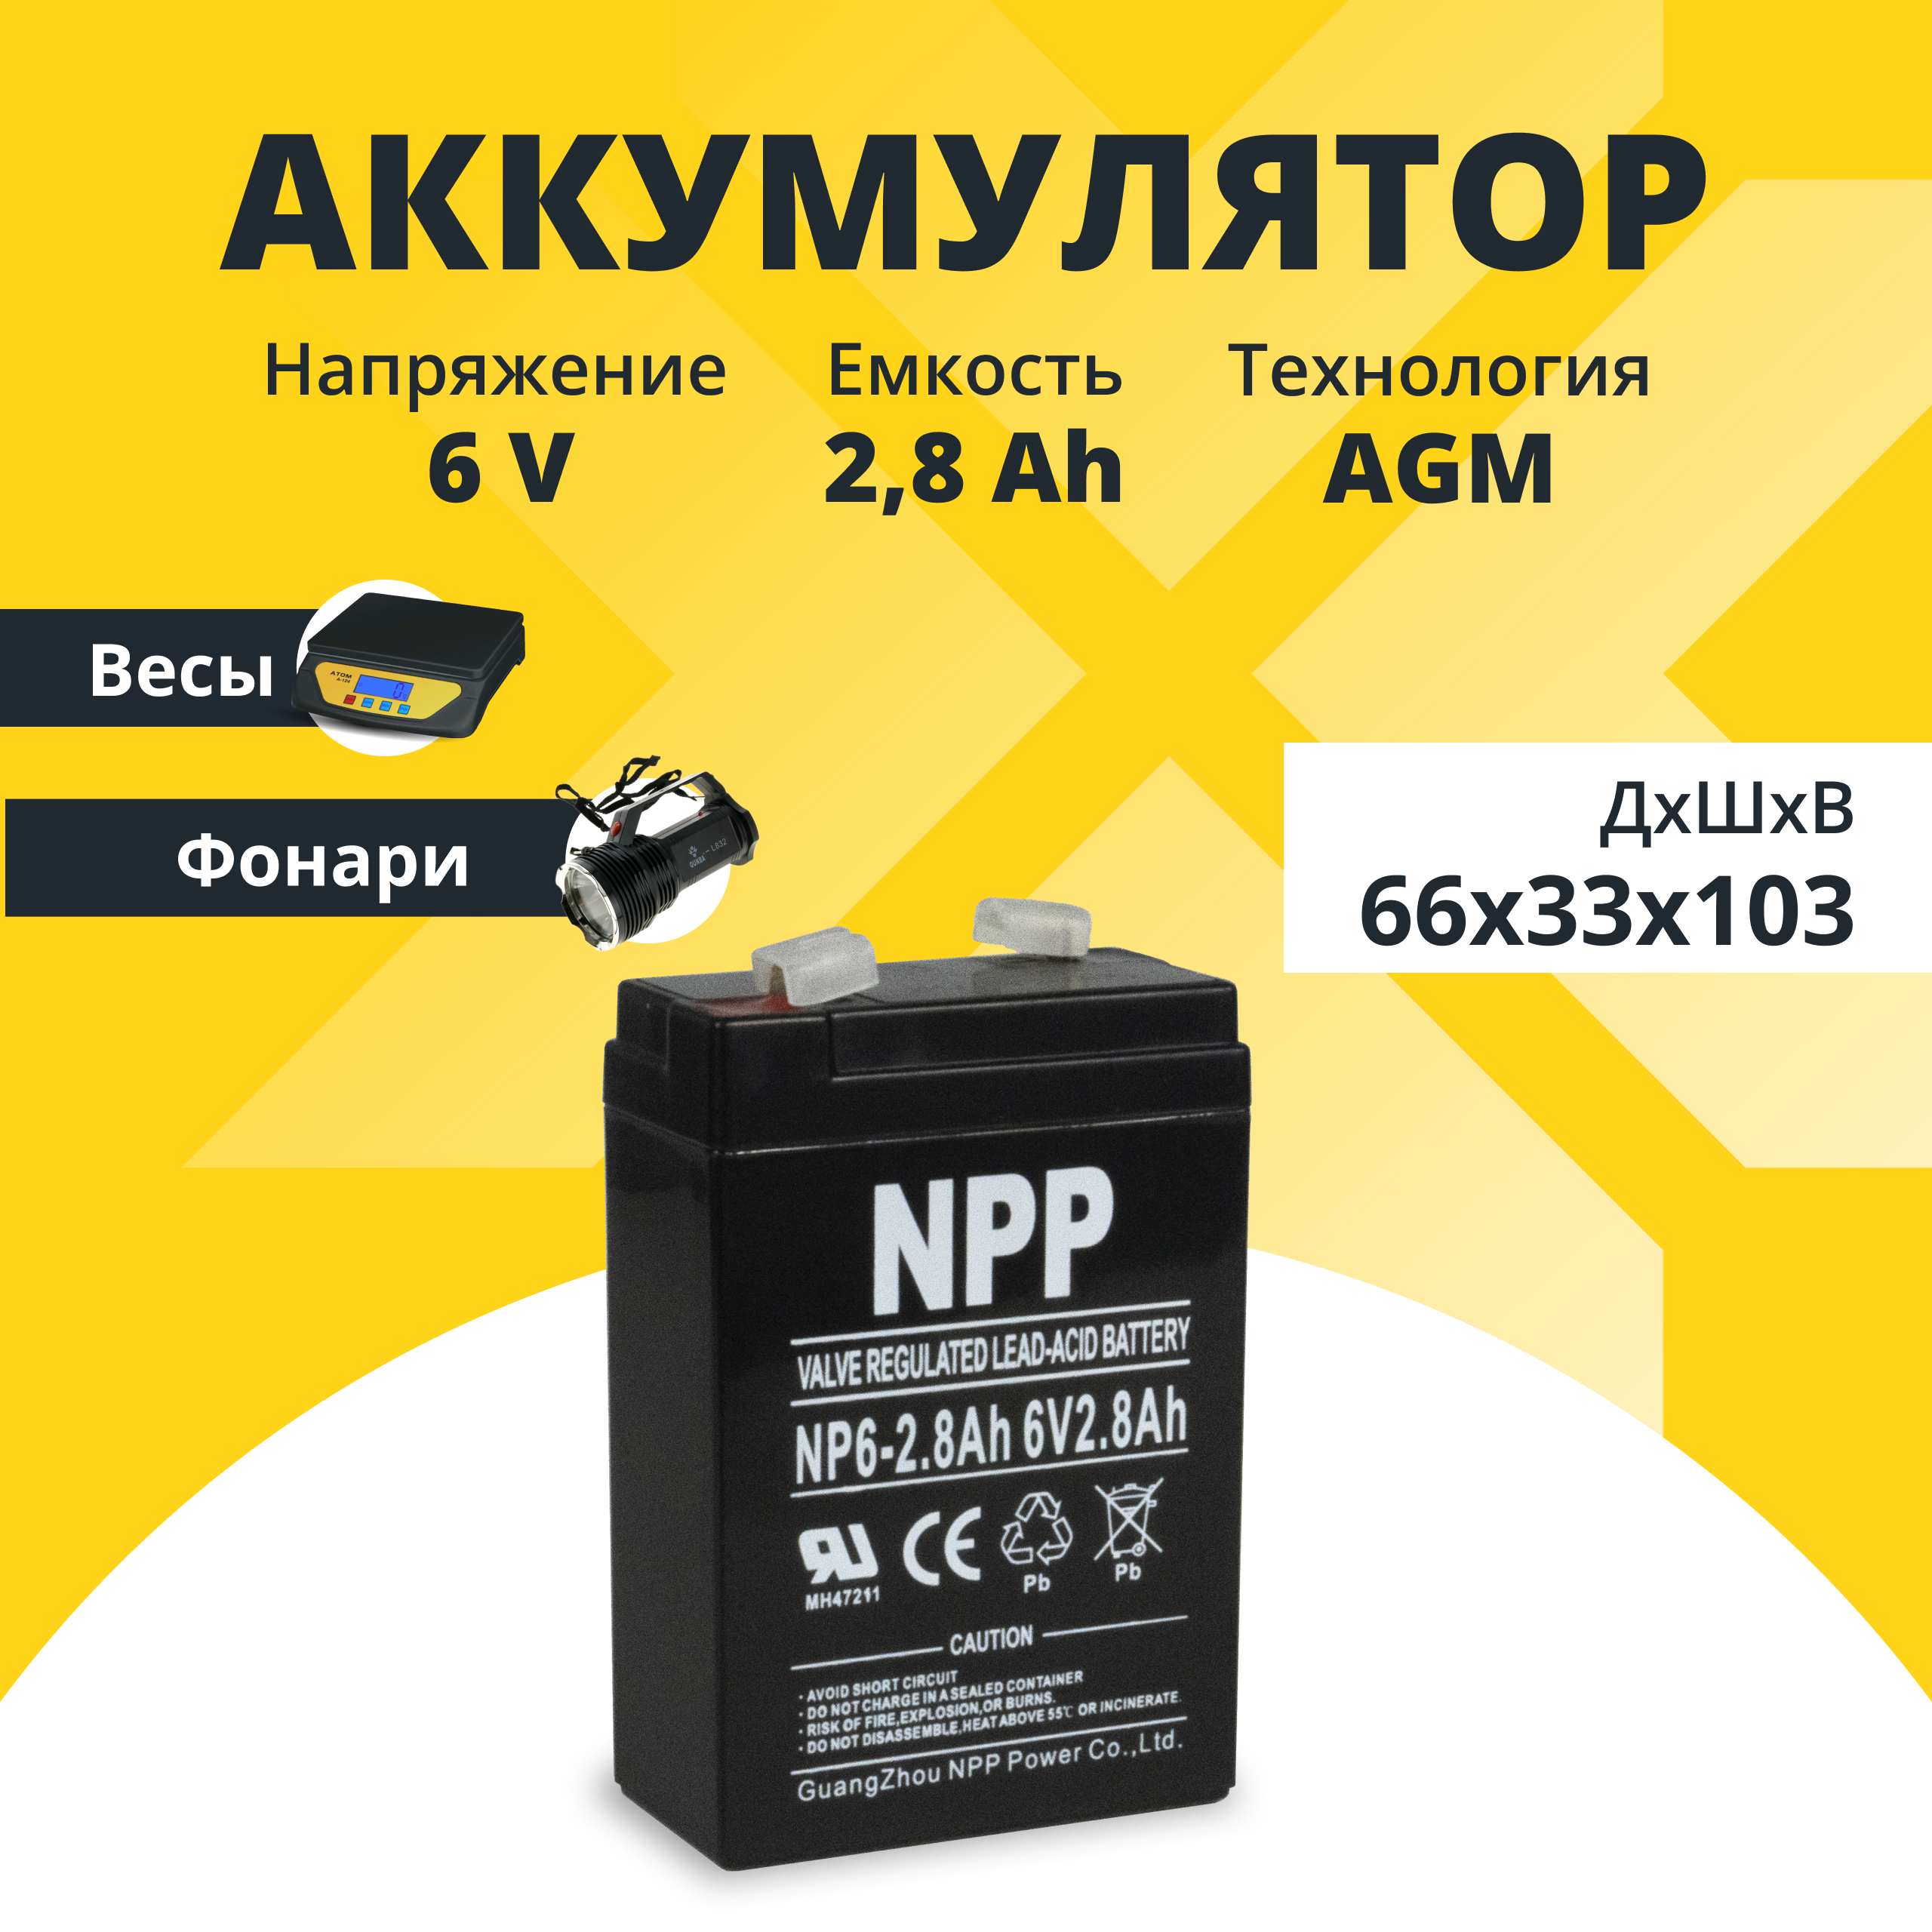 Аккумулятор для ибп NPP 6v 2.8Ah F1/T1 NP6-2.8Ah